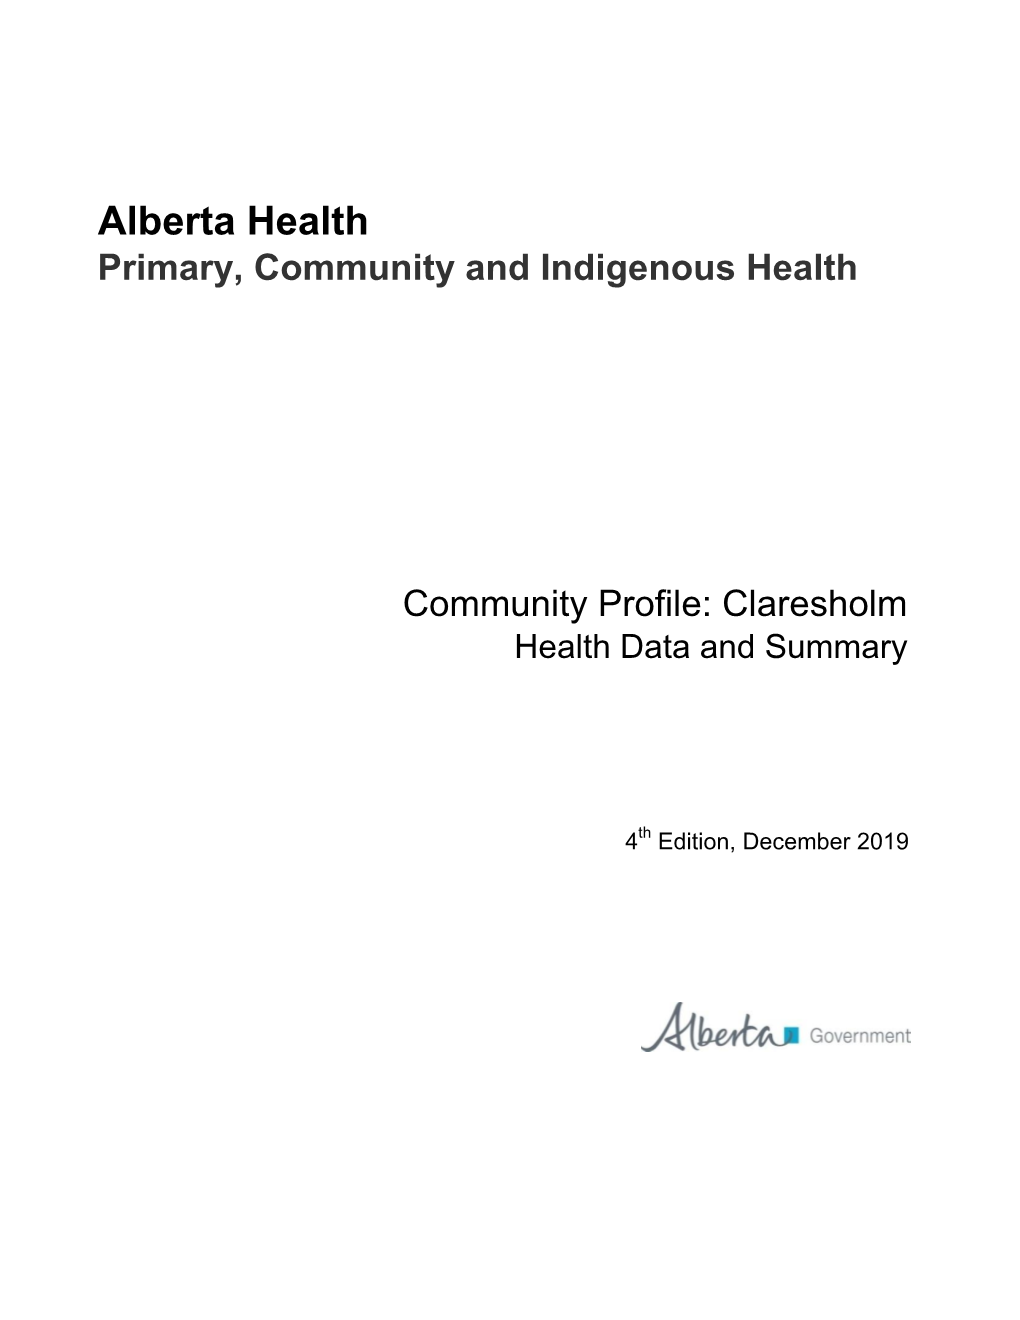 Community Profile: Claresholm Health Data and Summary. 4Th Edition